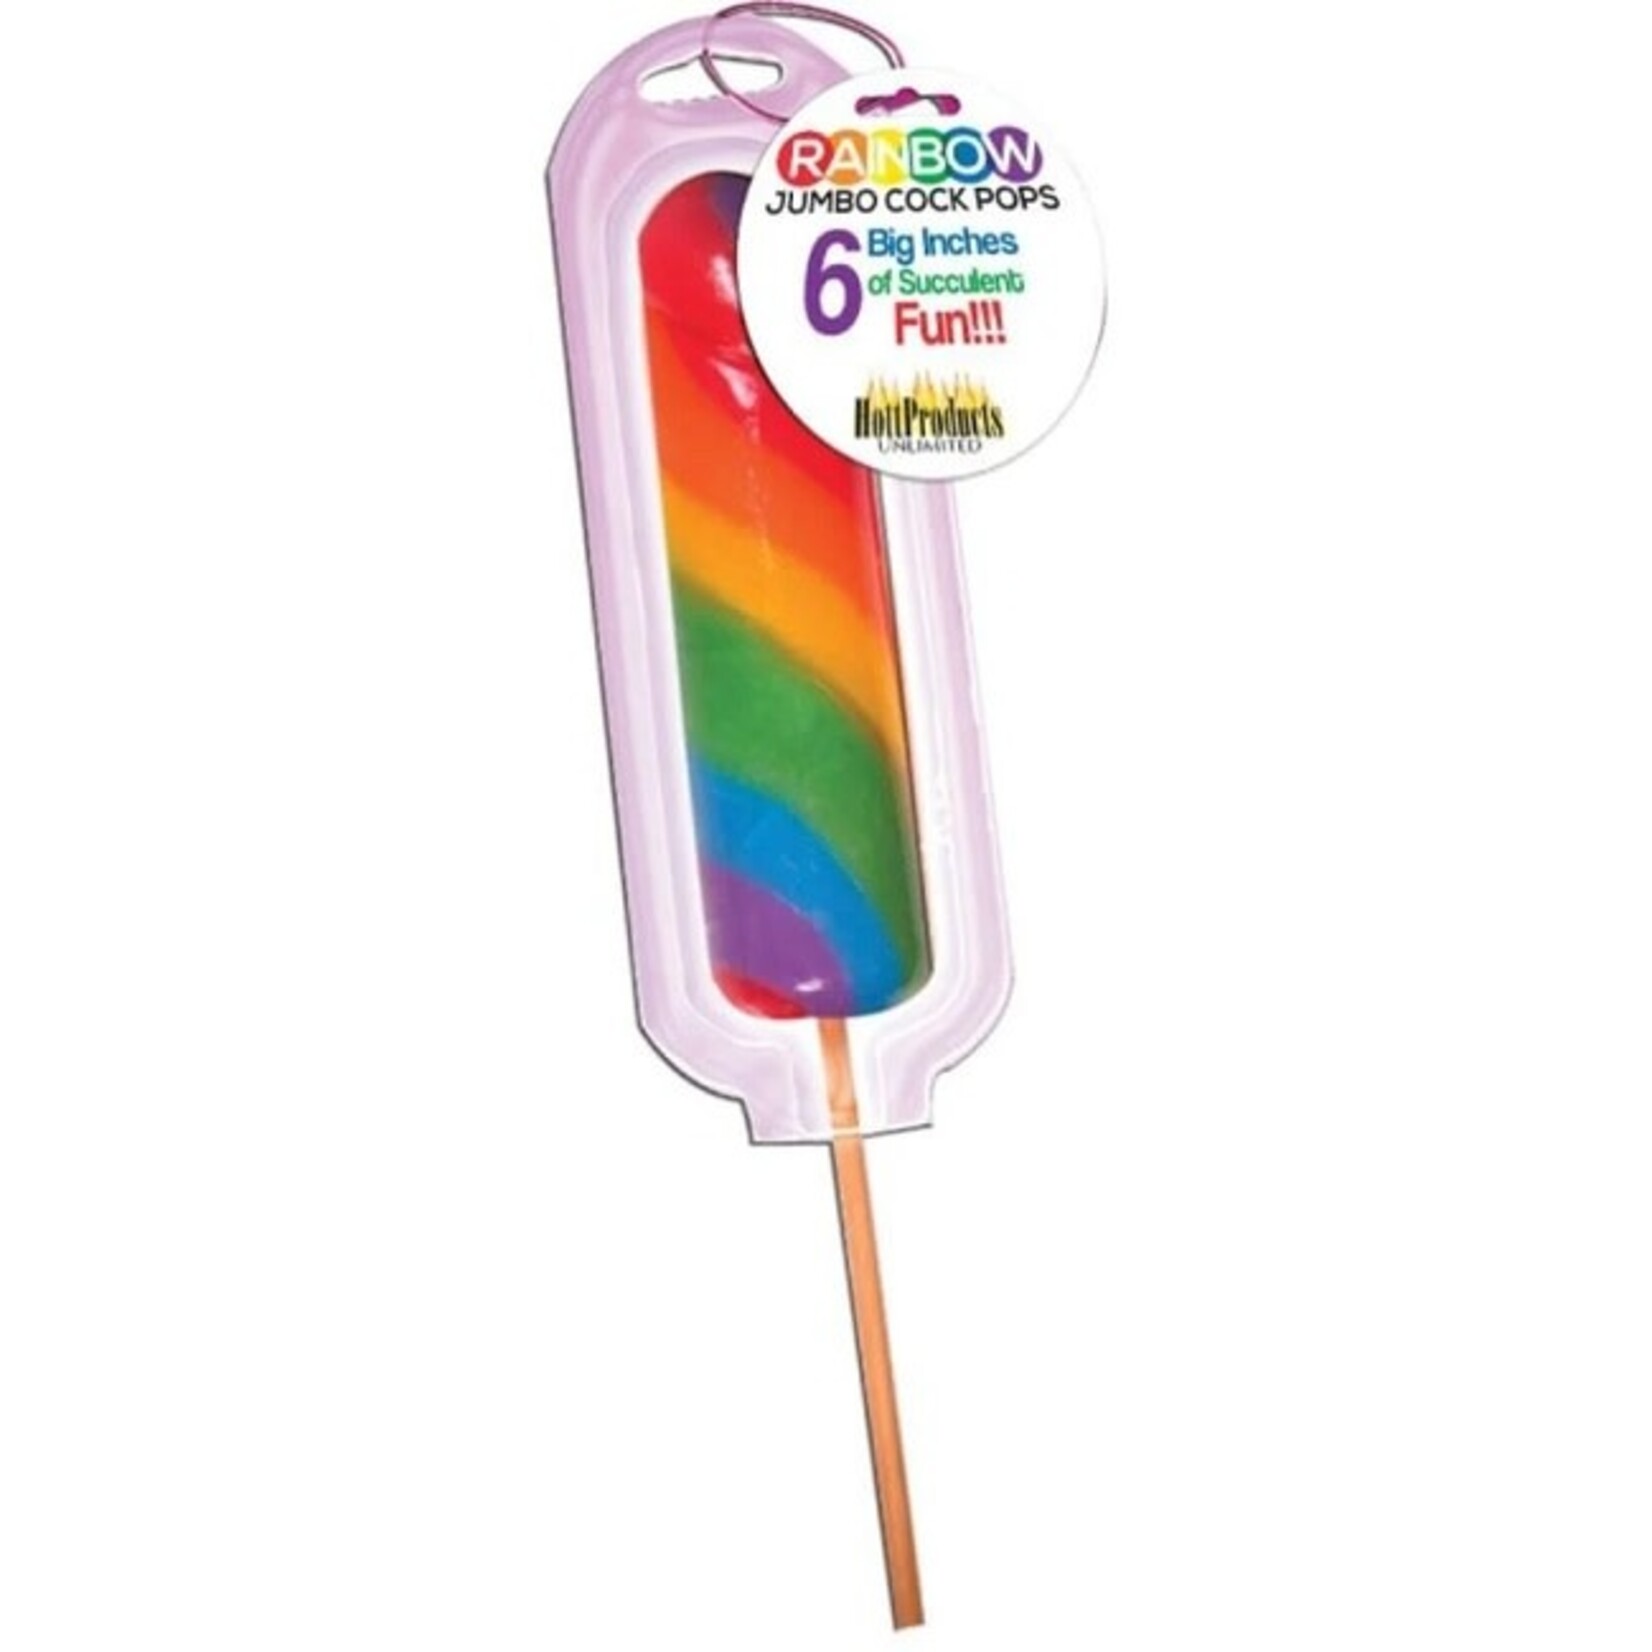 Hott Products Rainbow Jumbo Cock Pop